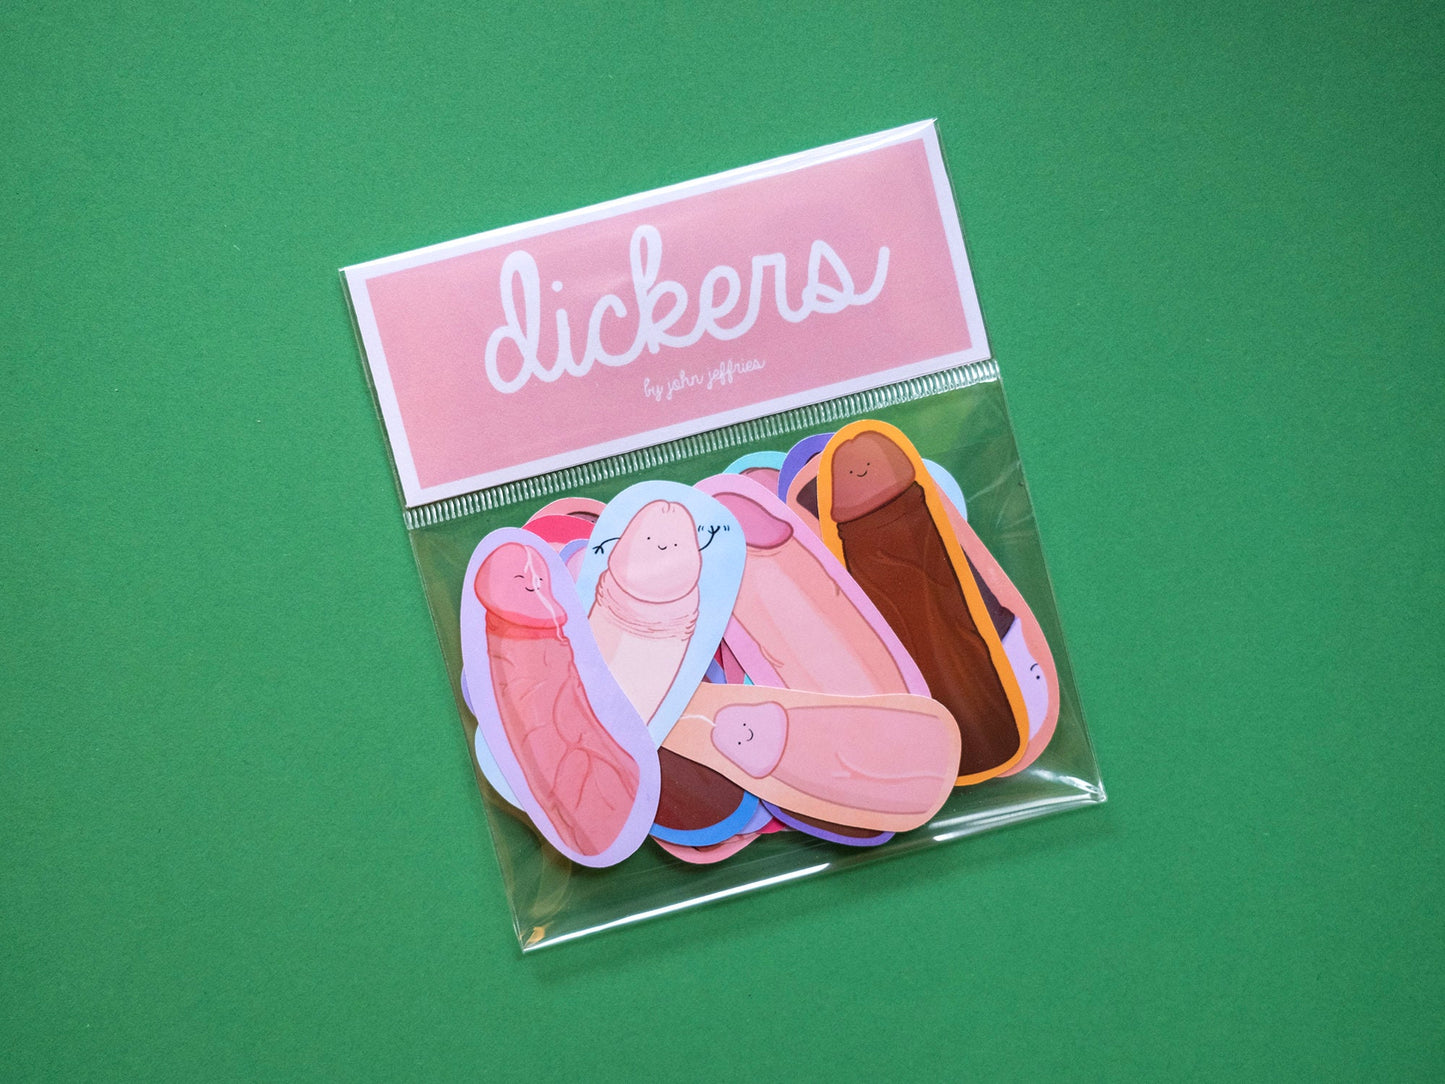 Dick Stickers, Dickers: Volume Three (20 stickers) - erotic stickers, Penis Stickers, Cock Stickers, Only Glans